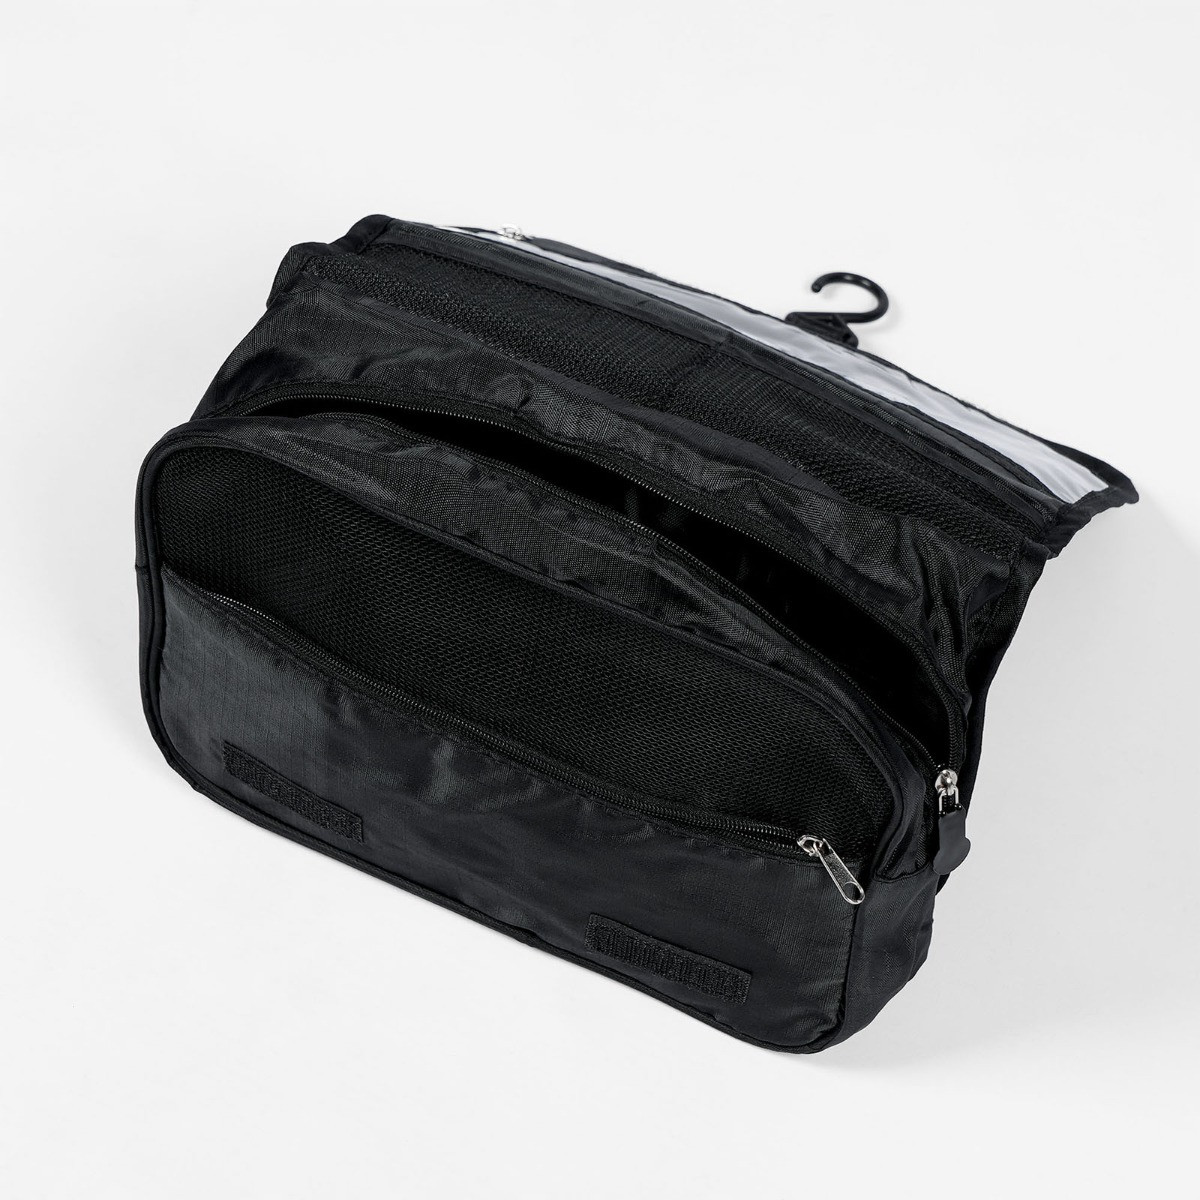 OHS Toiletries & Makeup Travel Bag - Black>